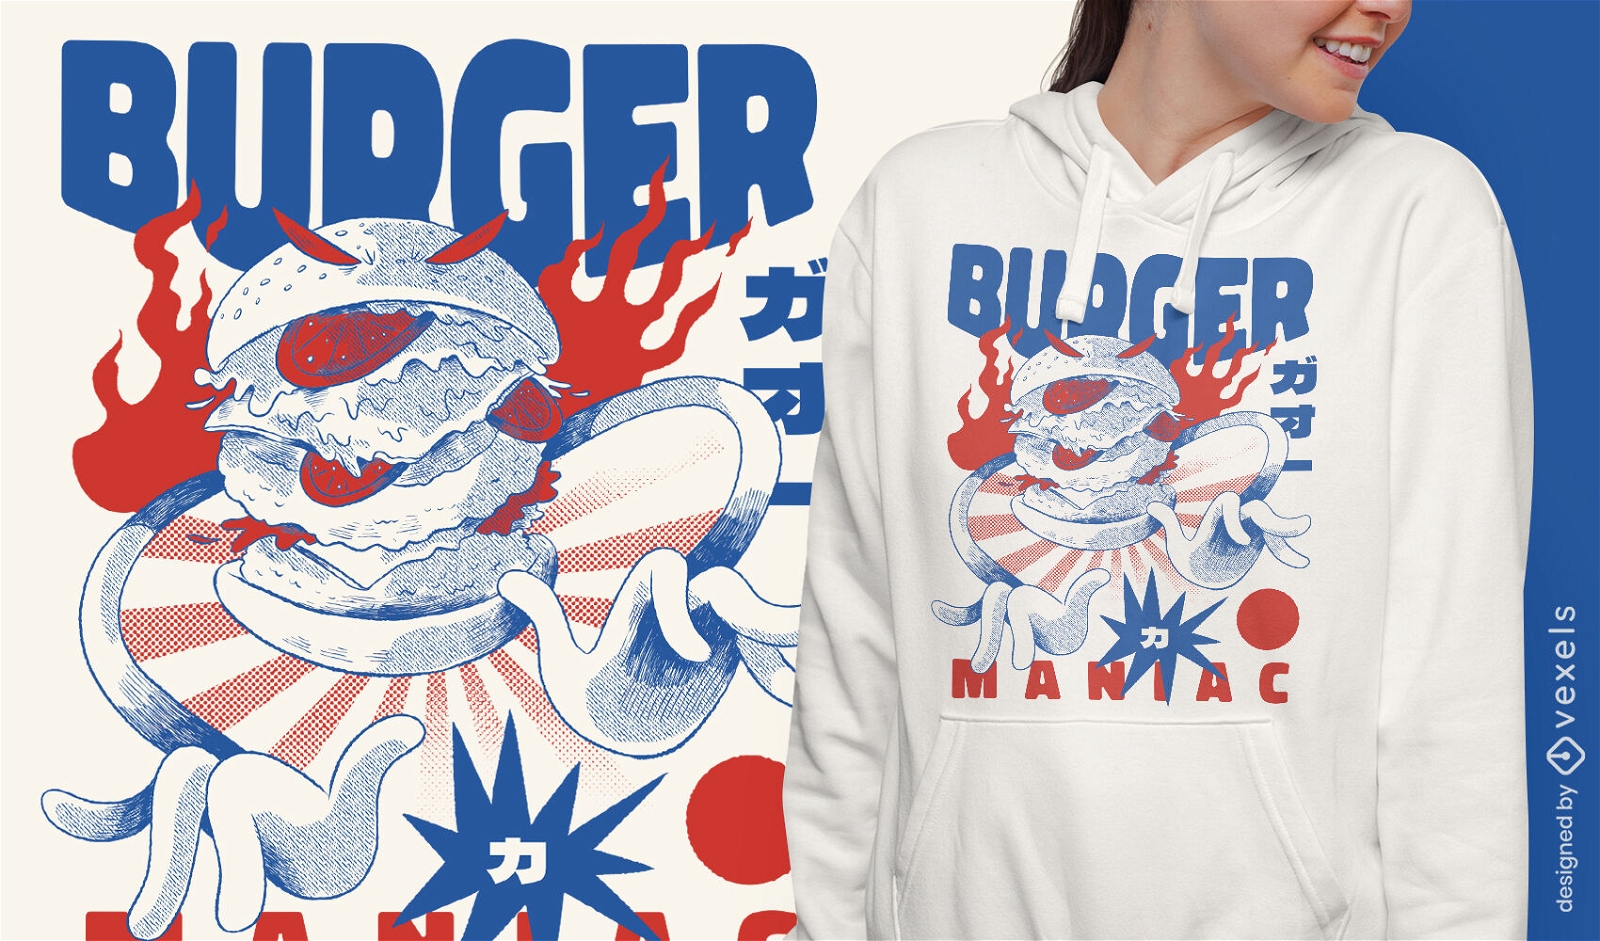 Burger monster t-shirt design